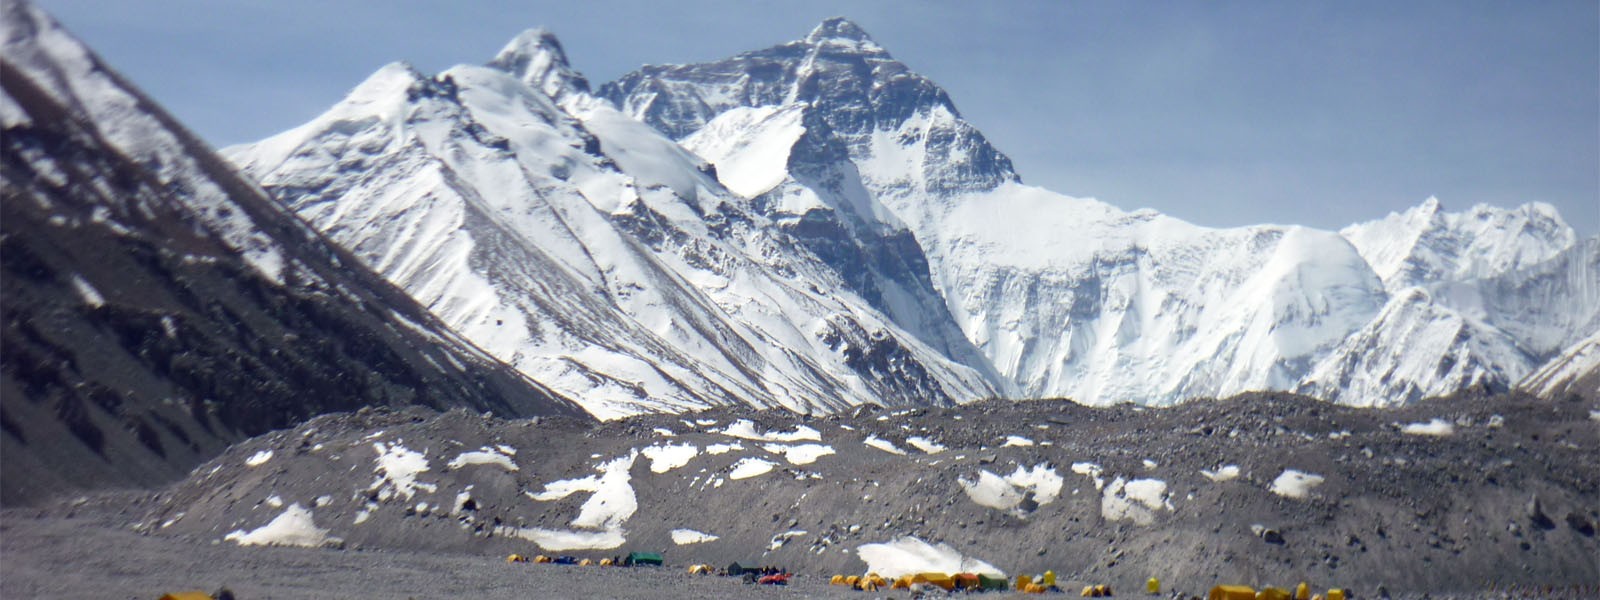 Kathmandu-Everest Base Camp - Lhasa - Xian and Beijing Tours